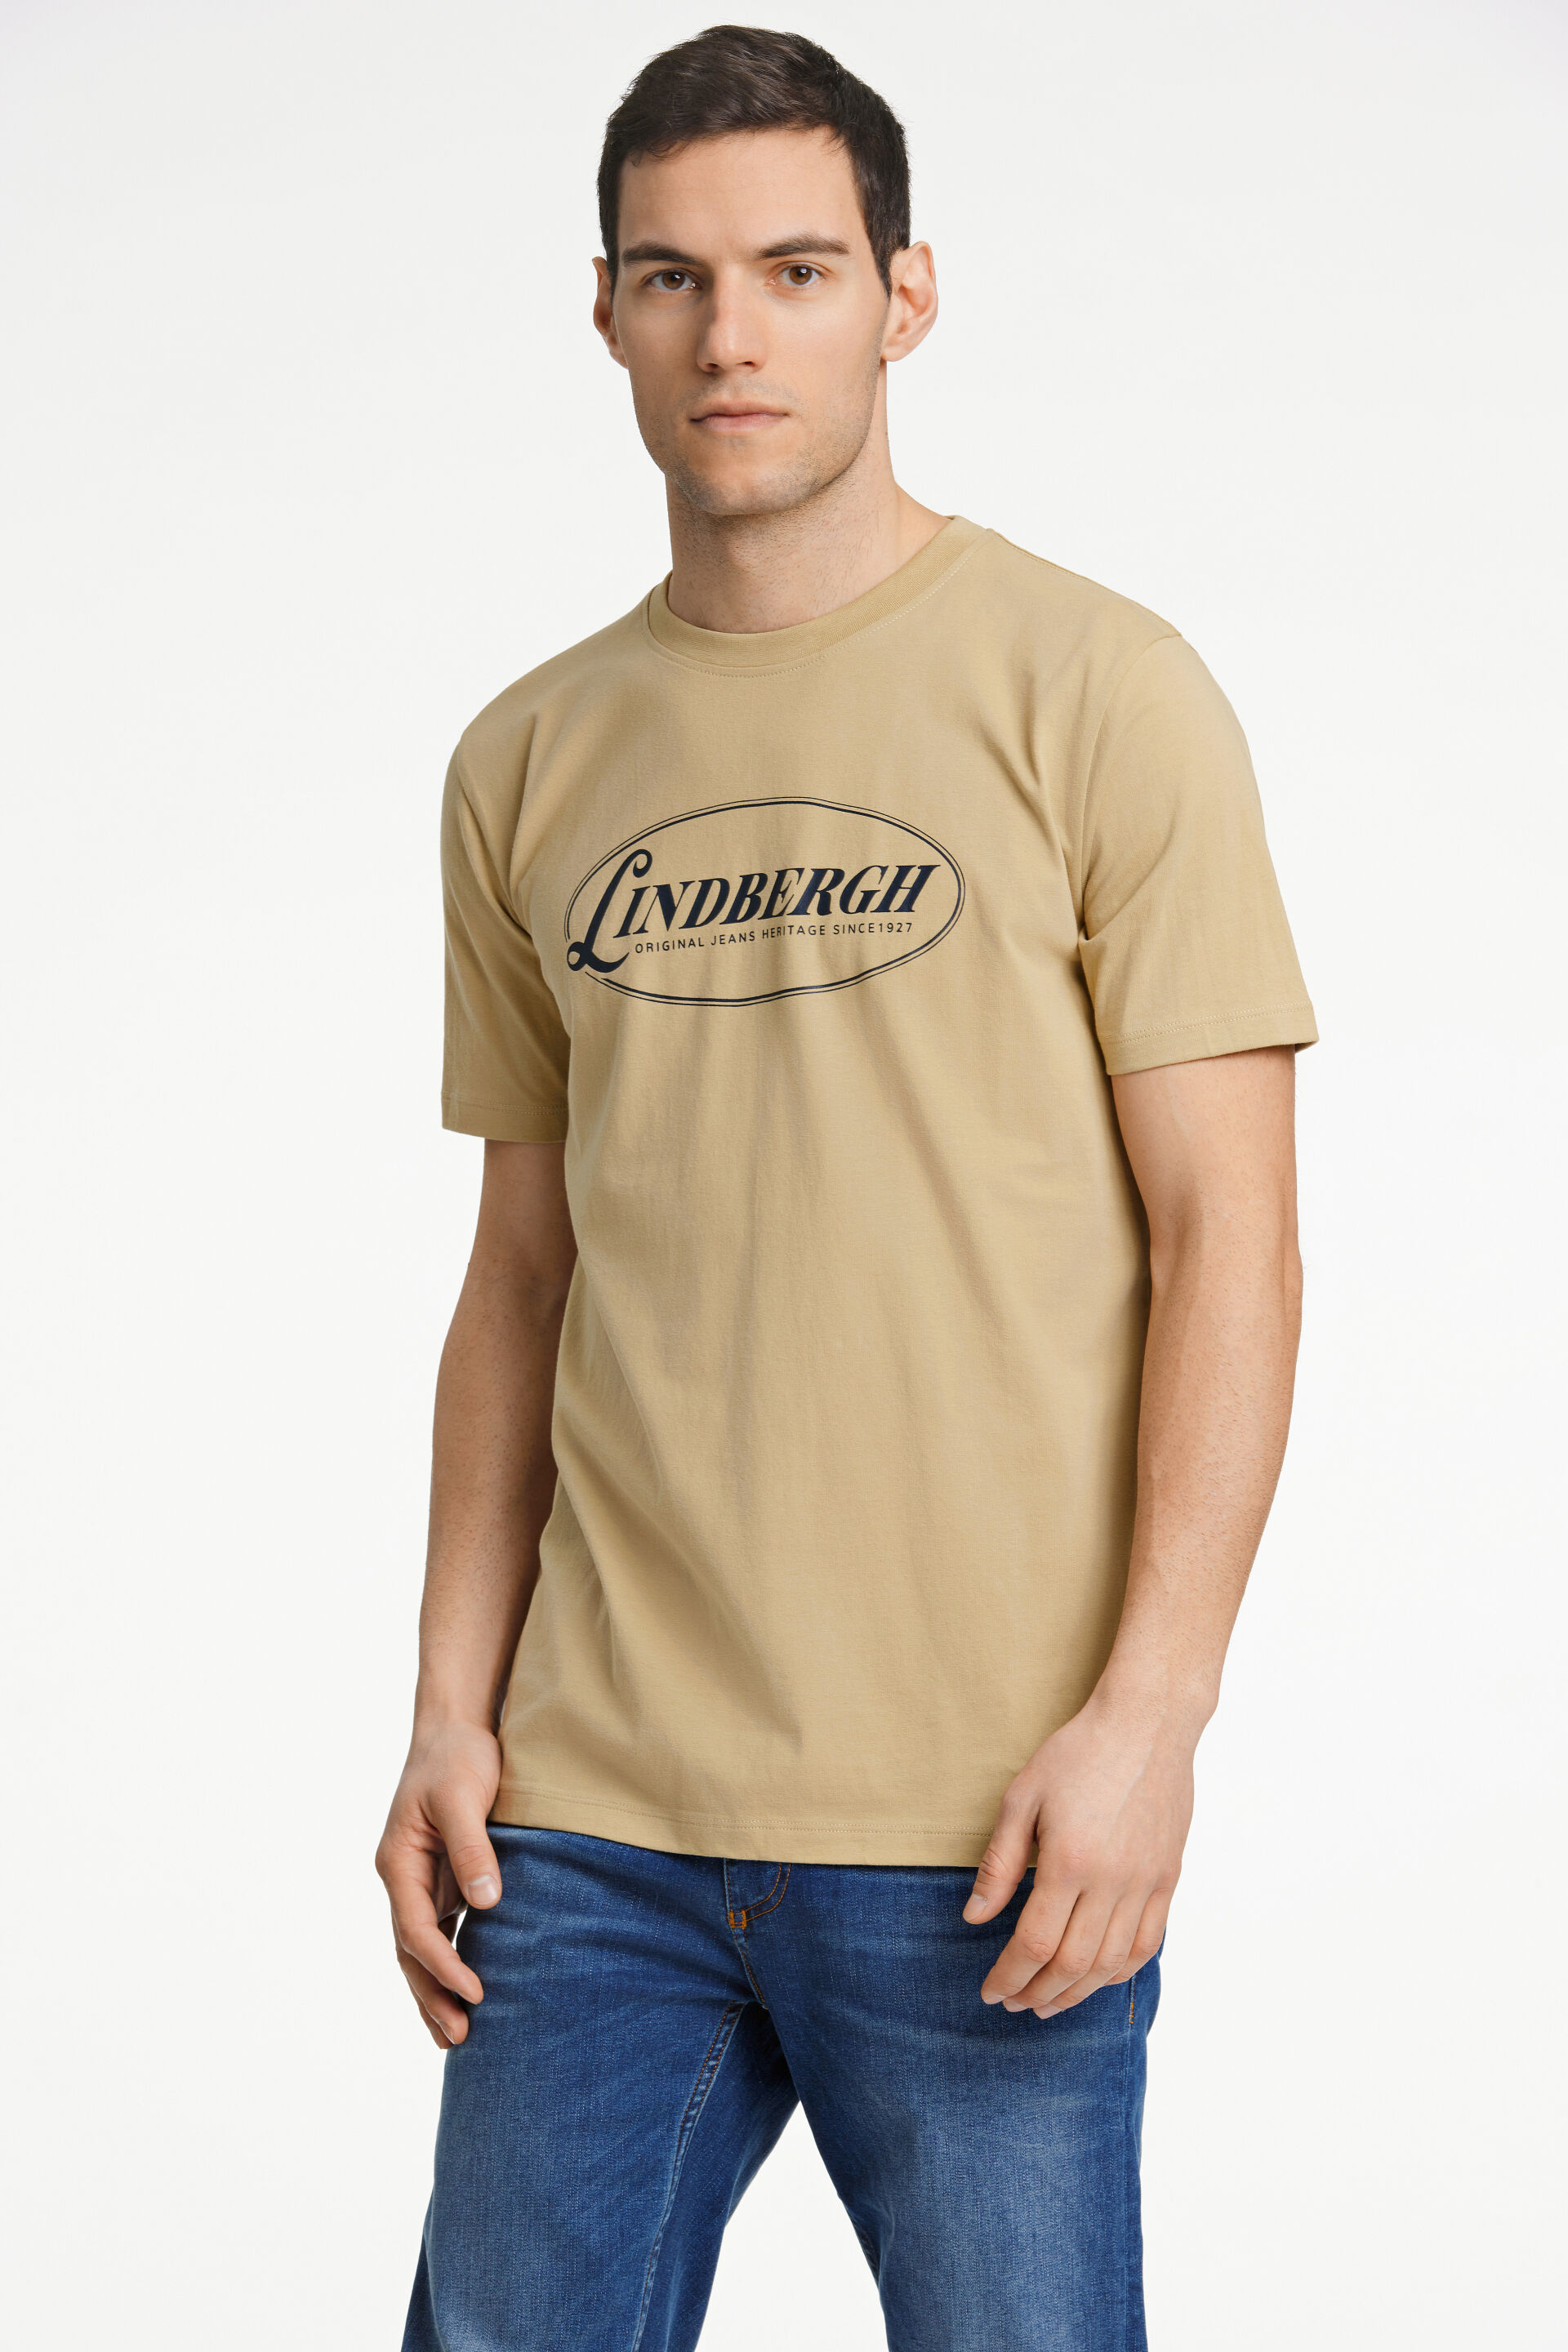 Lindbergh  T-shirt Sand 30-420161